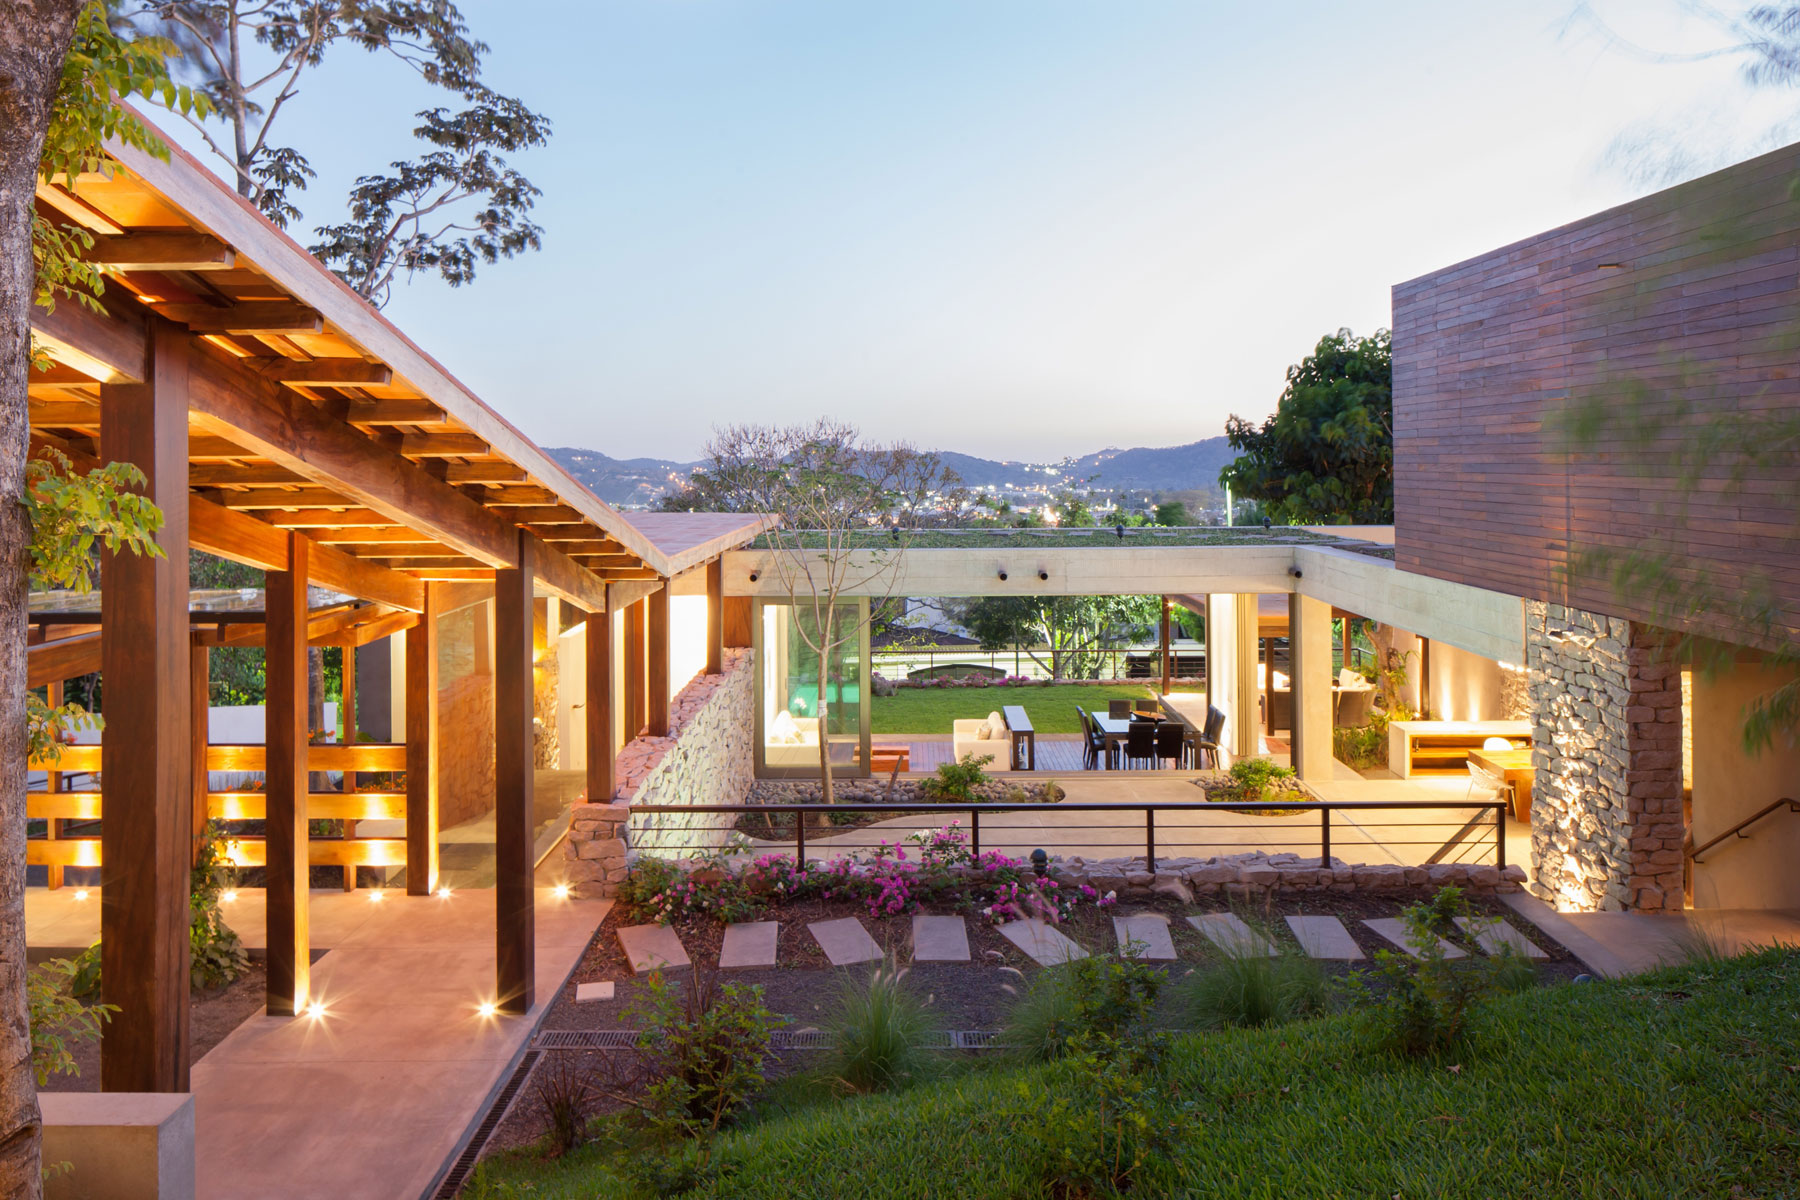 http://www.caandesign.com/wp-content/uploads/2015/09/Modern-Rustic-Sensation-Of-Garden-House-in-El-Salvador-by-Cincopatasalgato-19.jpg